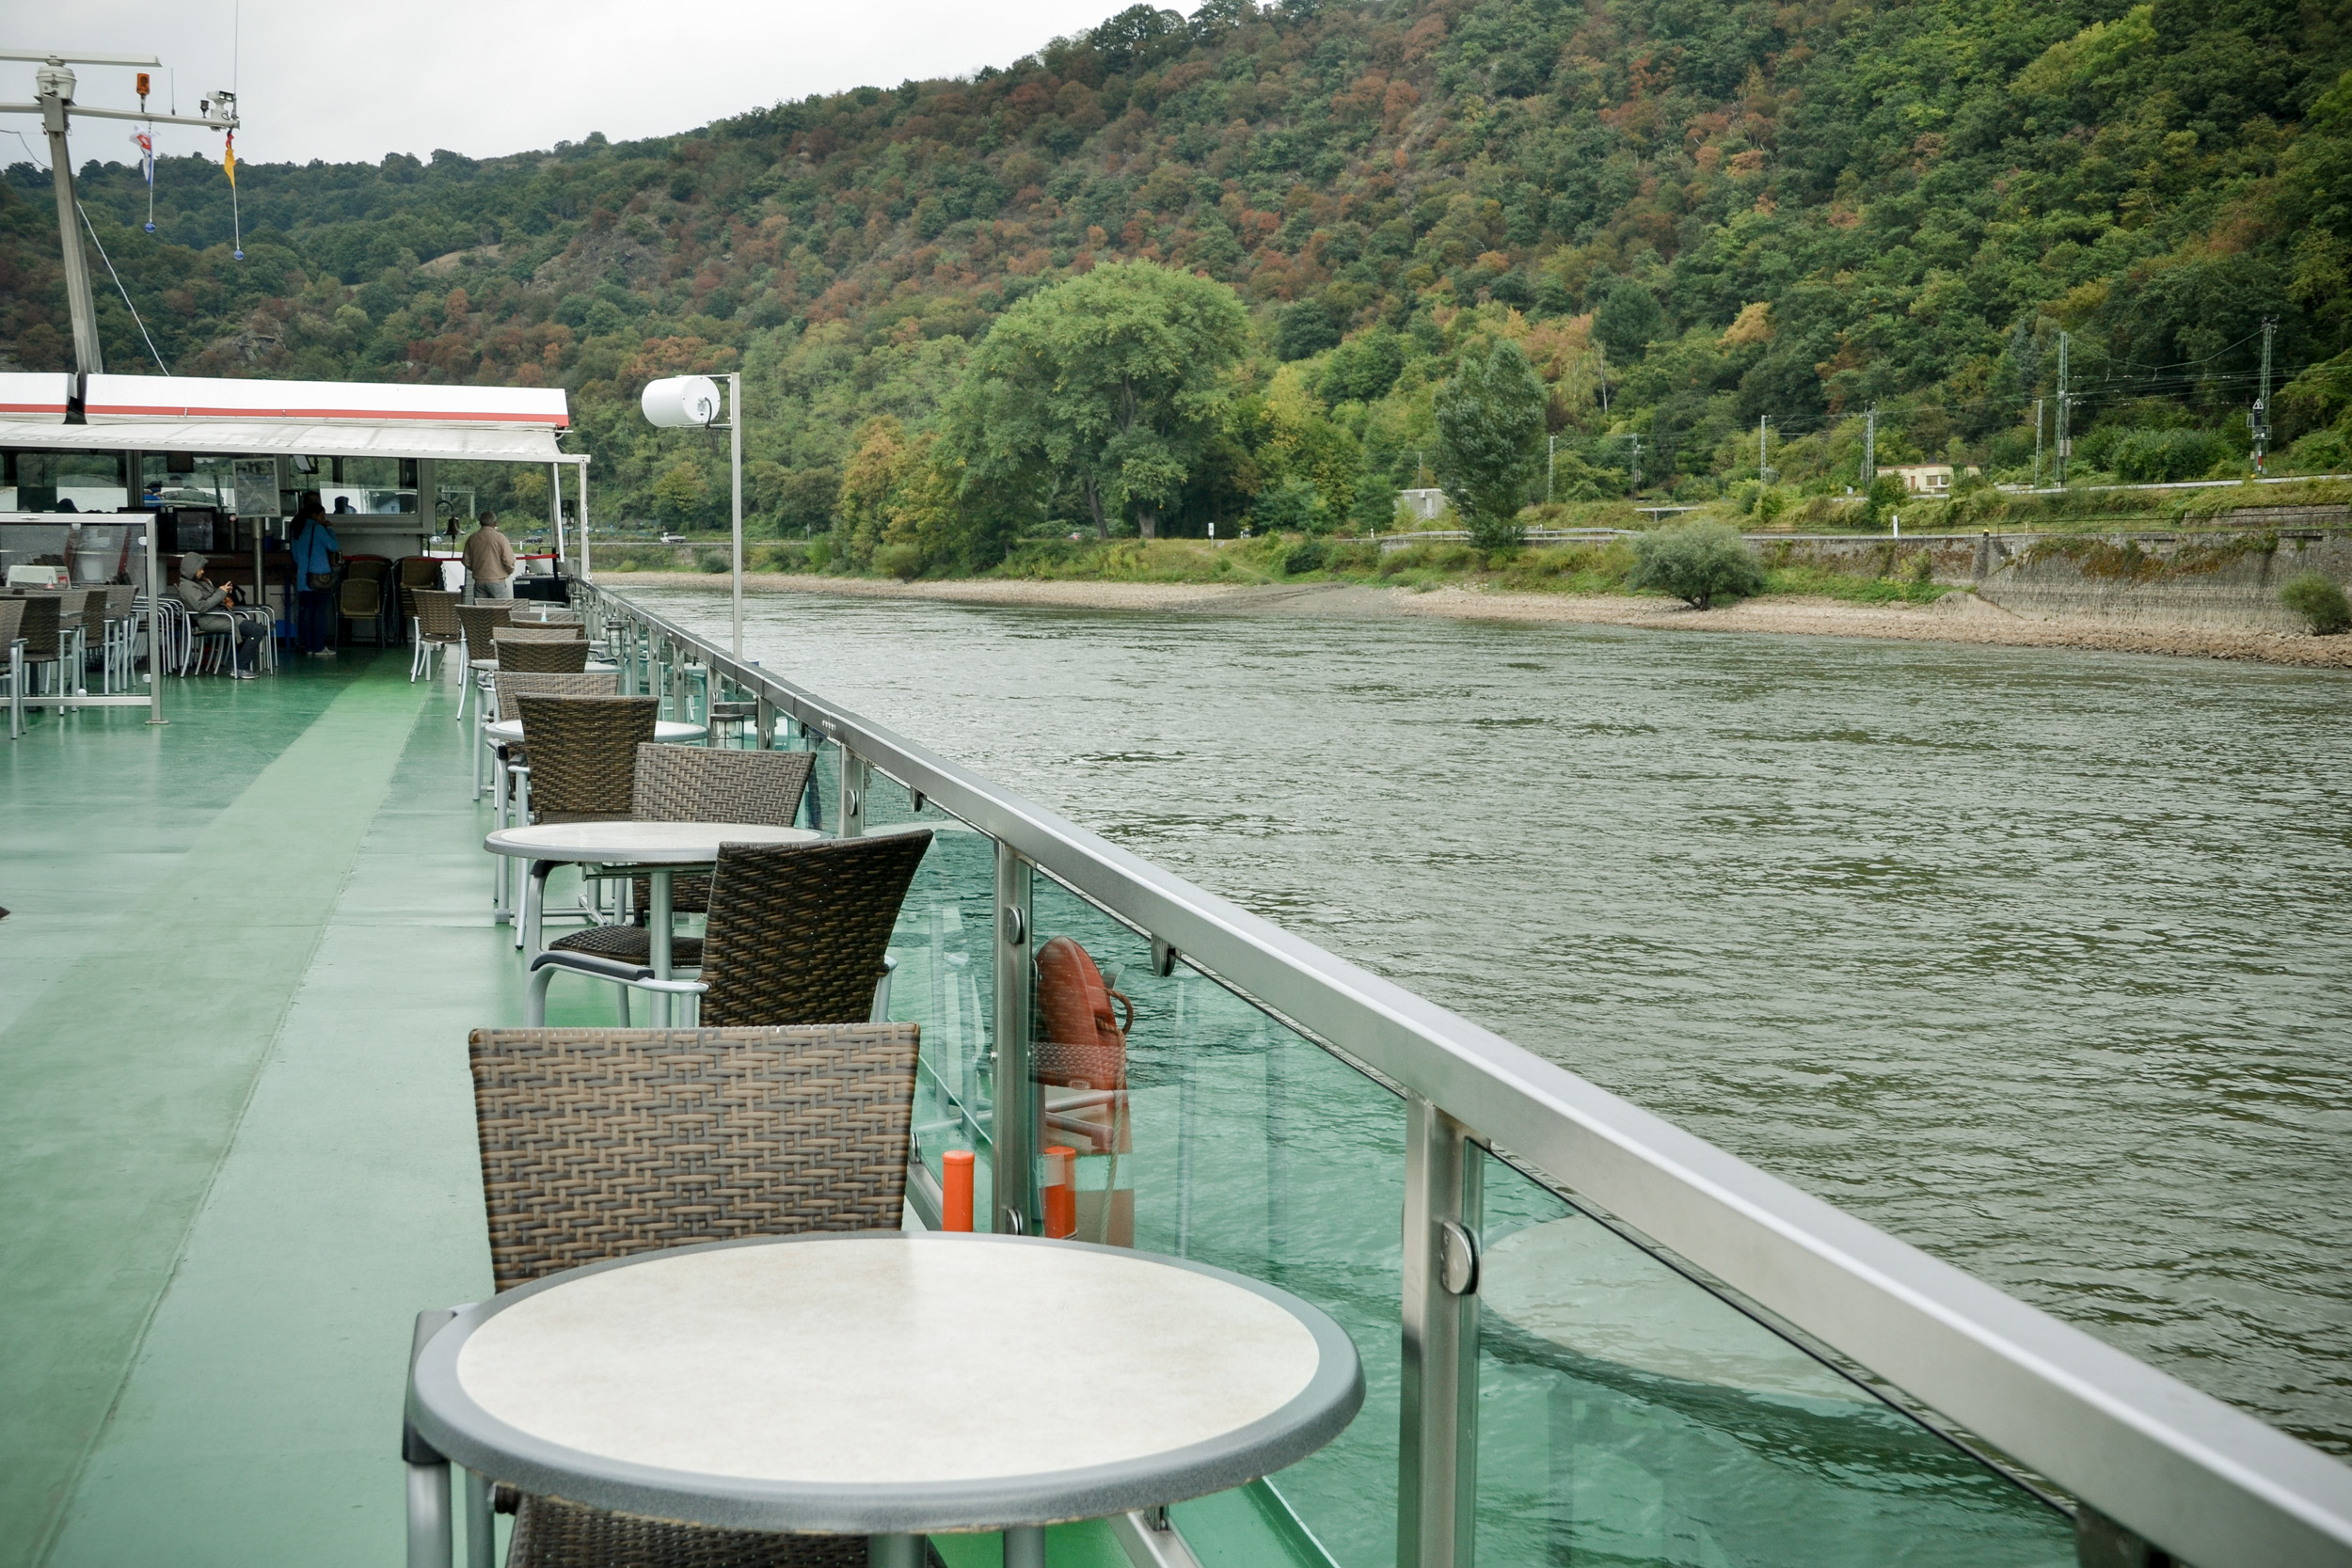 Rhine Germany